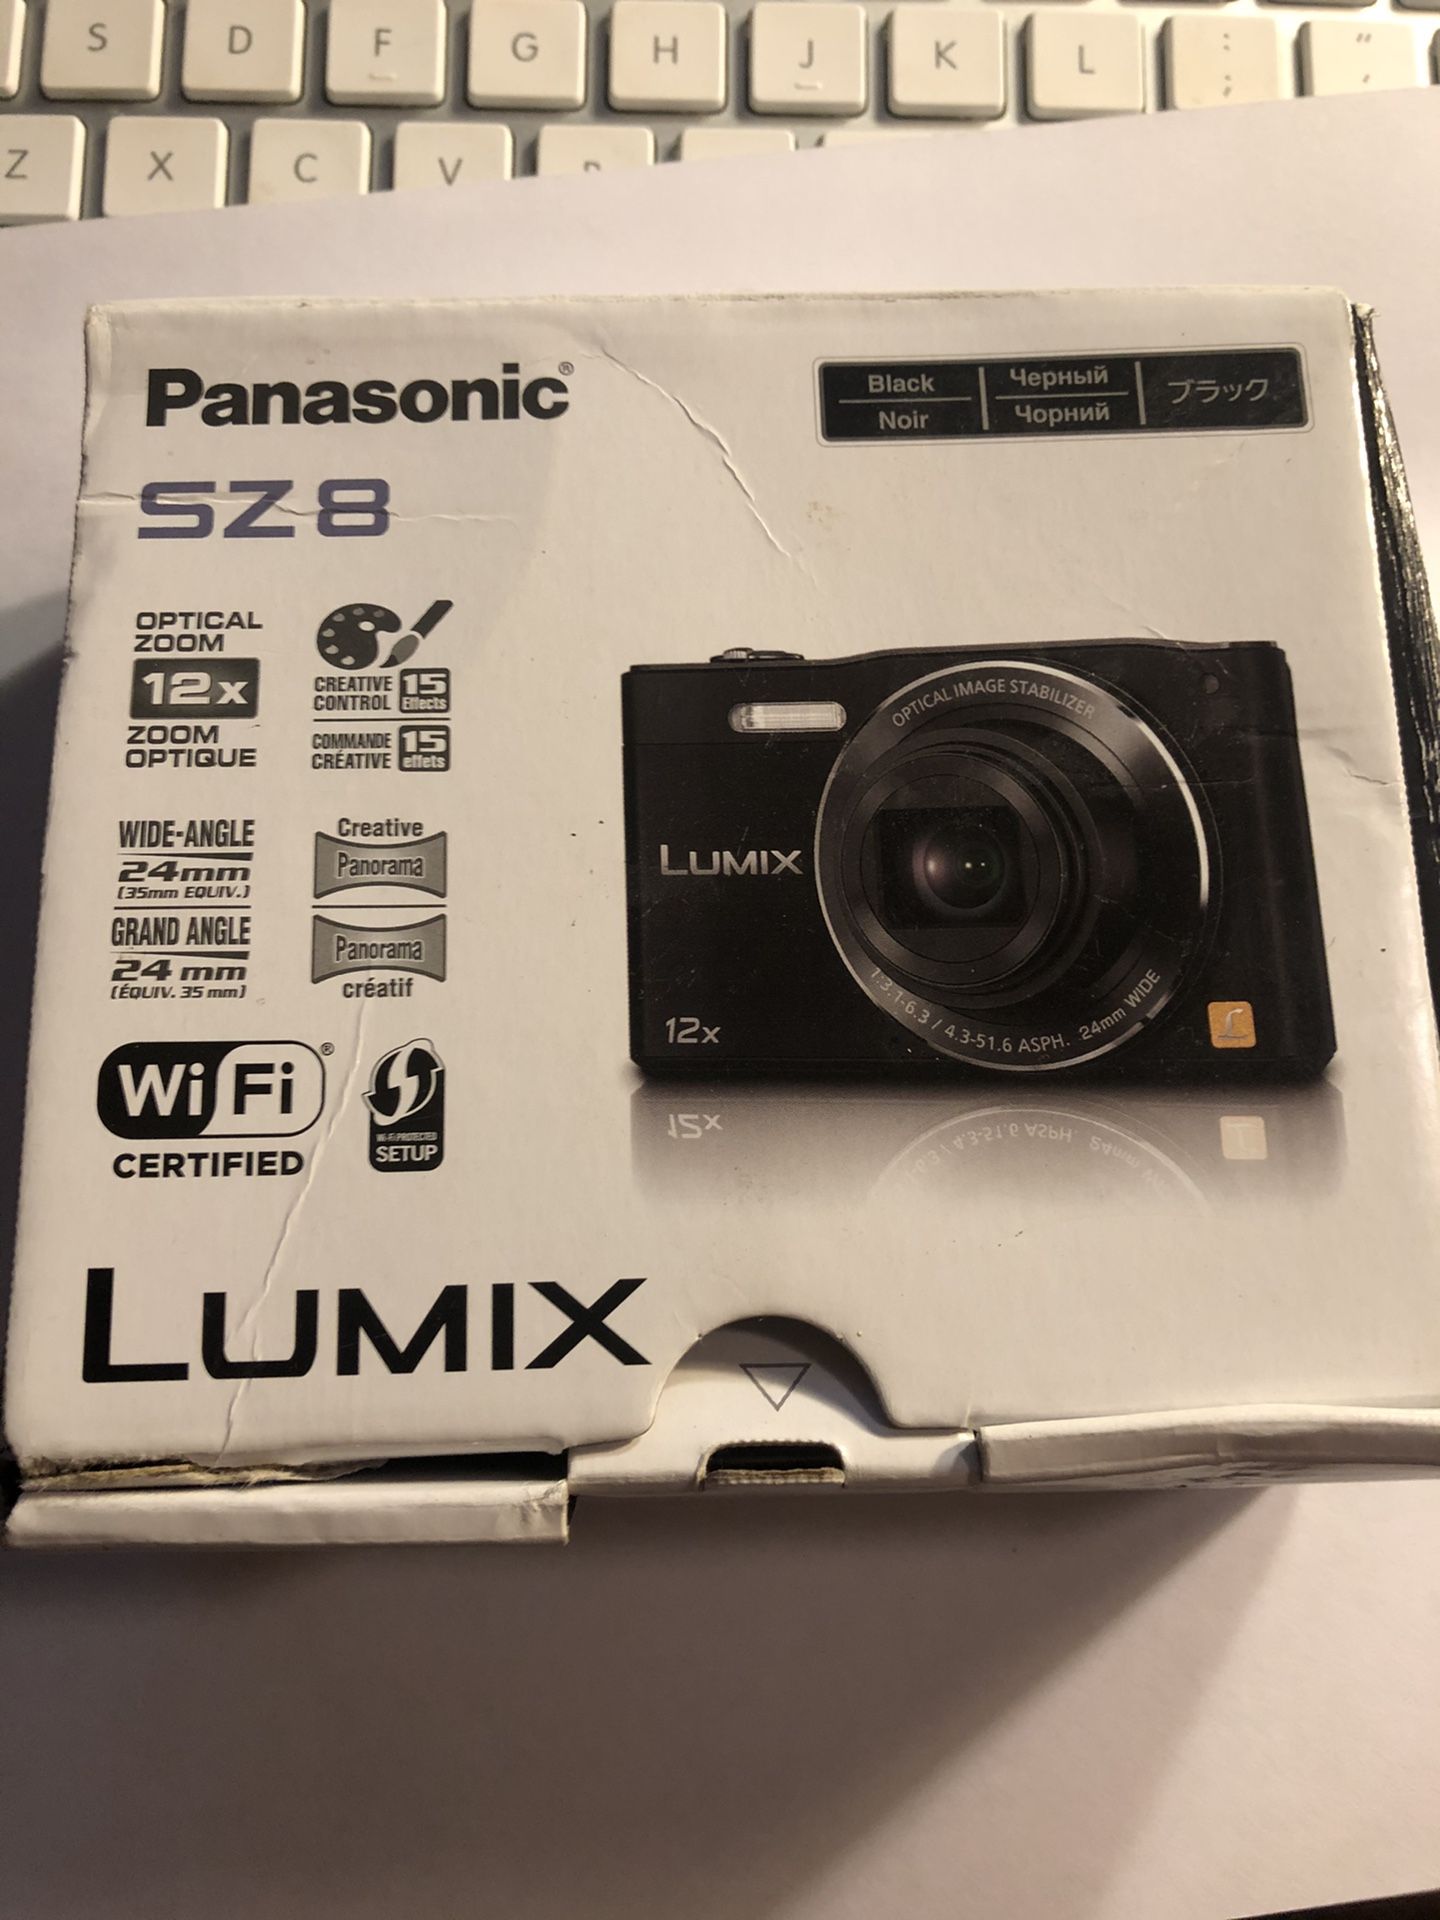 Panasonic digital camera w/Wifi